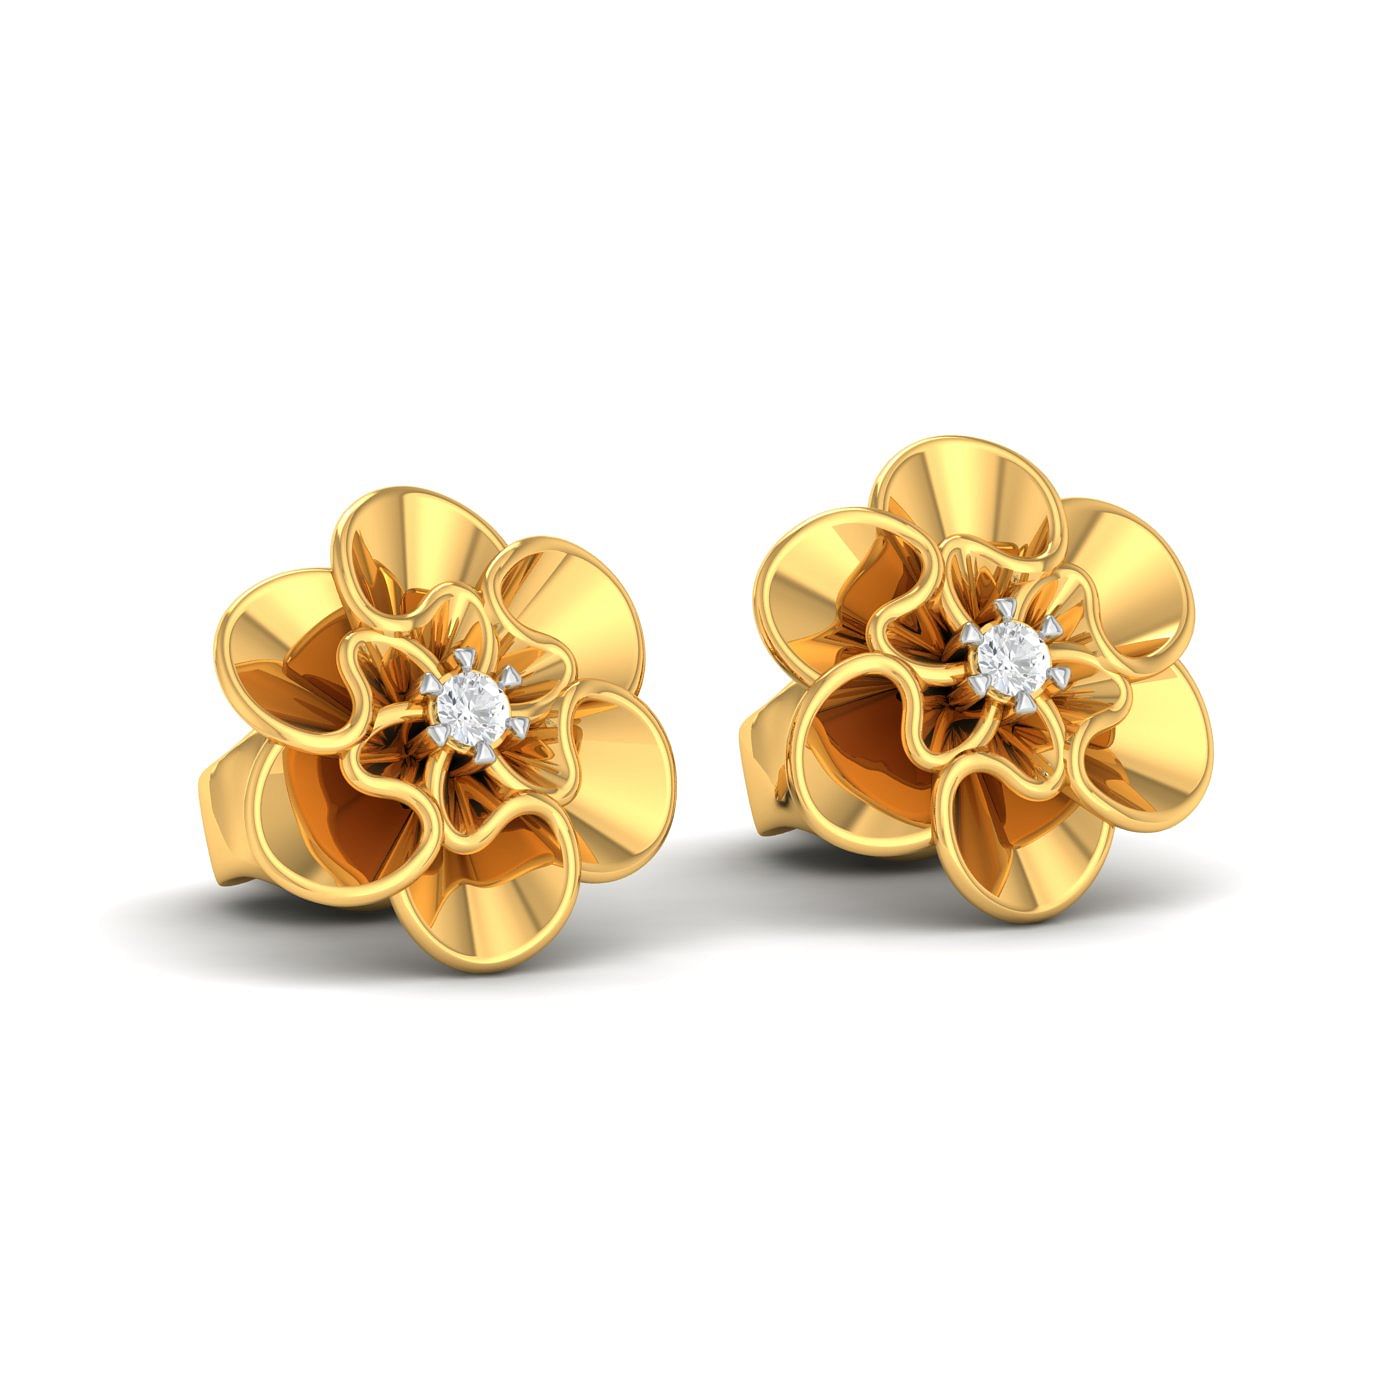 14k Yellow Gold Delicate Rose Diamond Earrings for daily wear